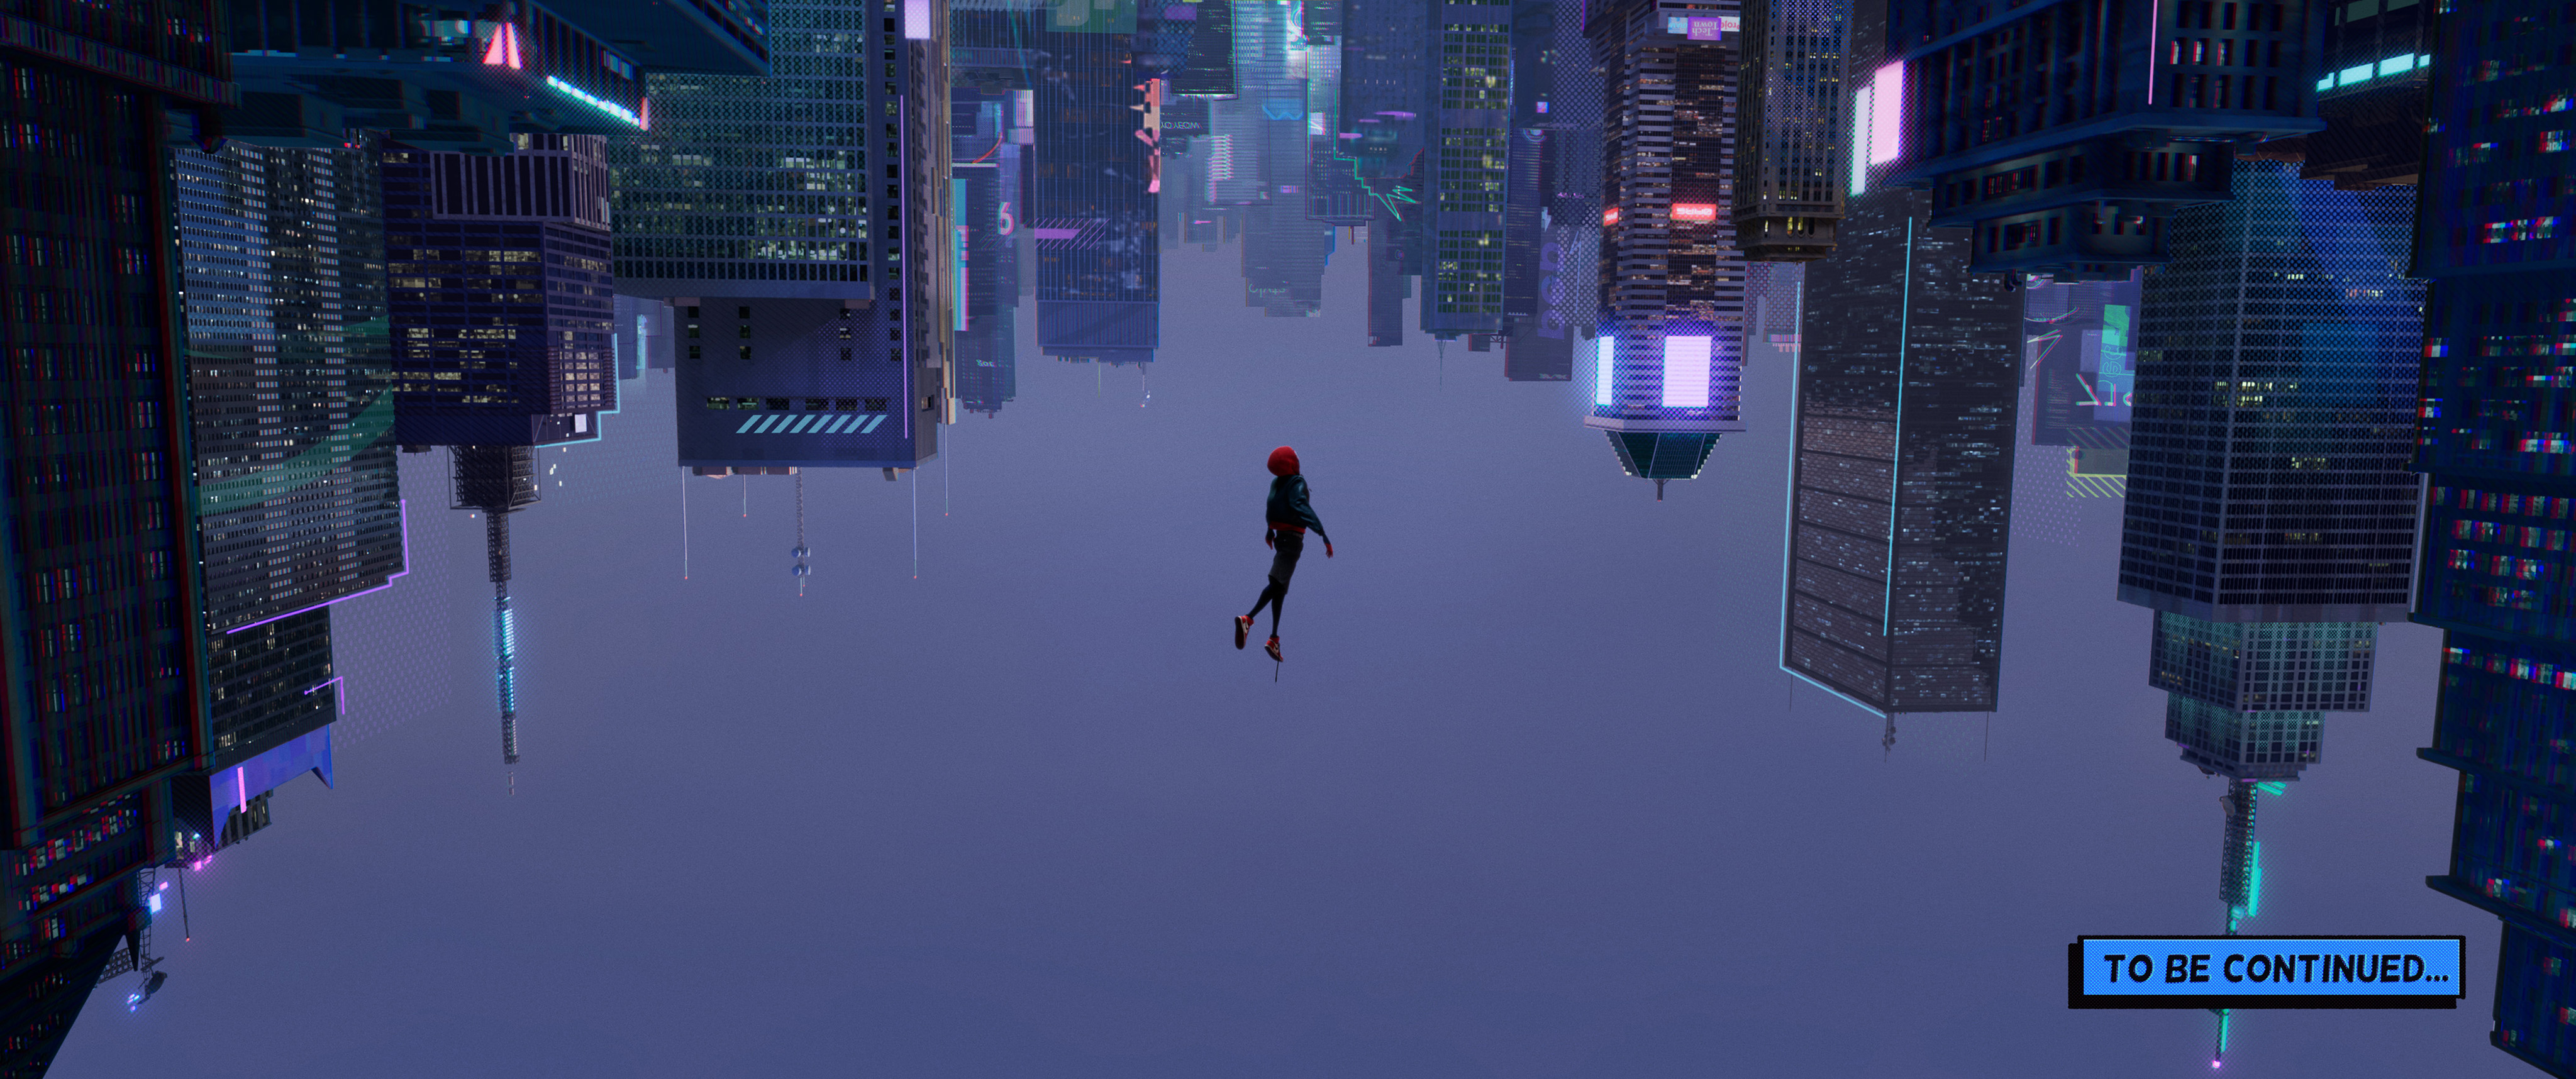 Spider-Man™: Into the Spider-Verse Gallery 6